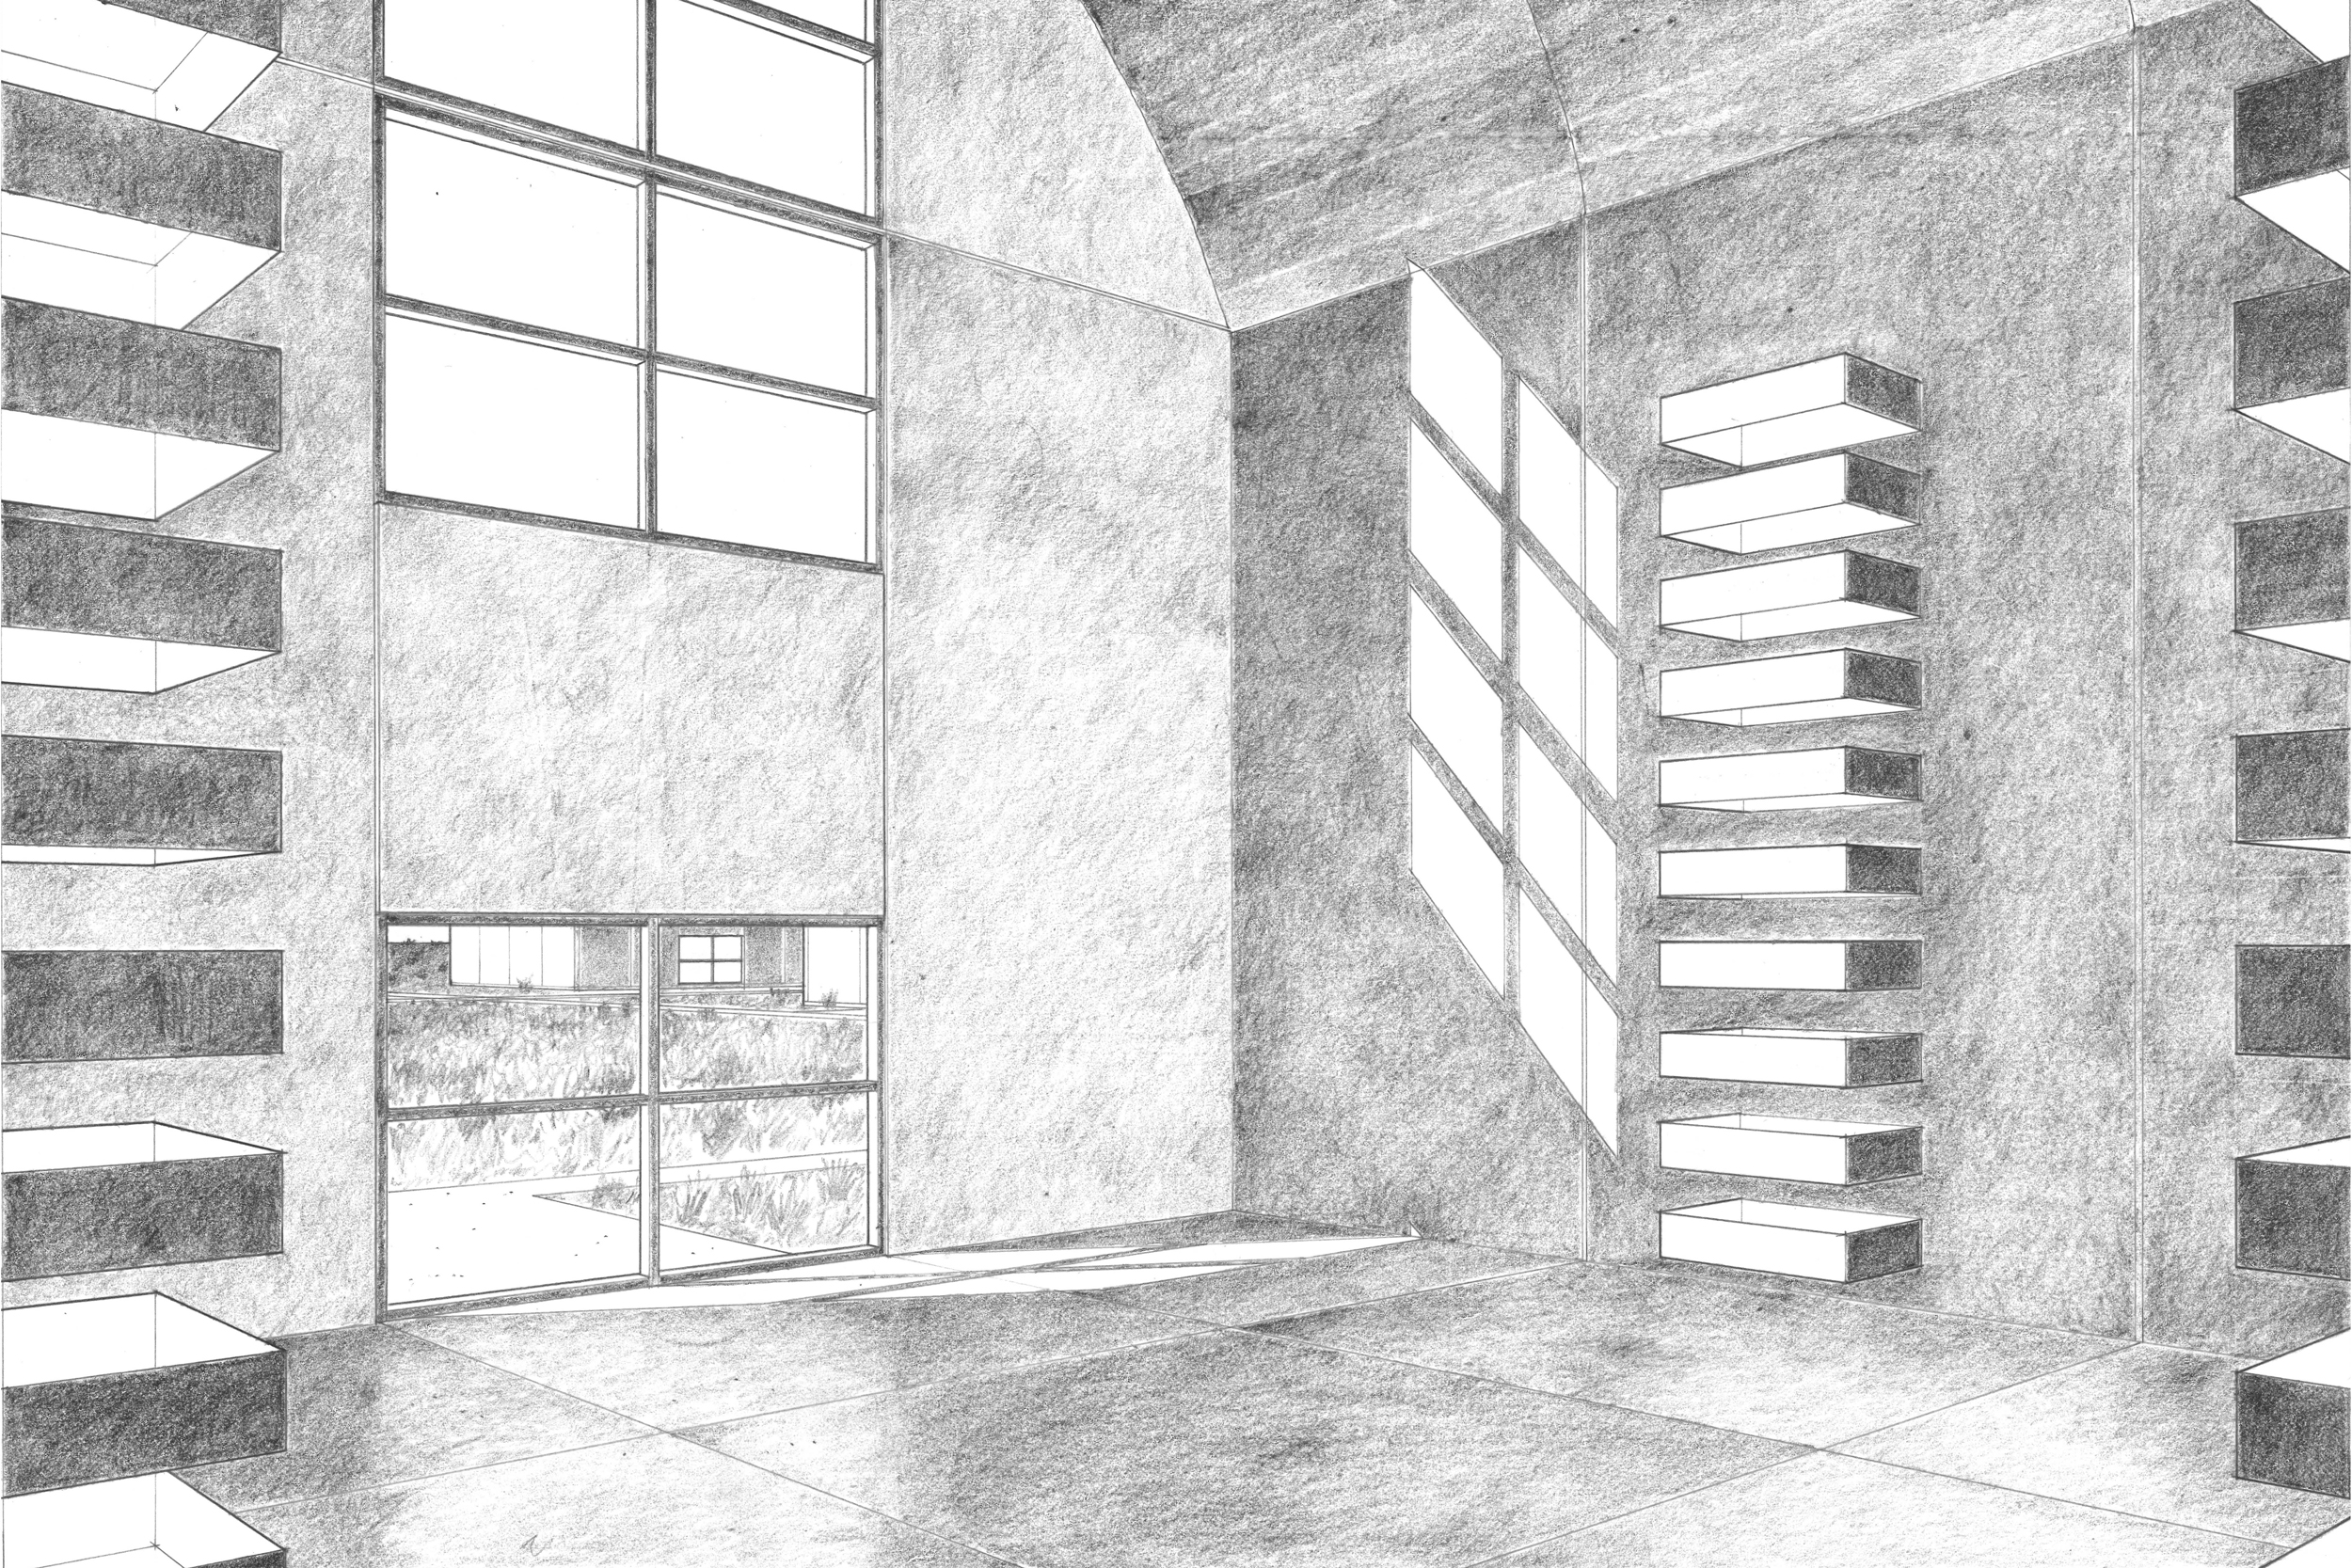 Marfa Panel 6 - Center for Architecture